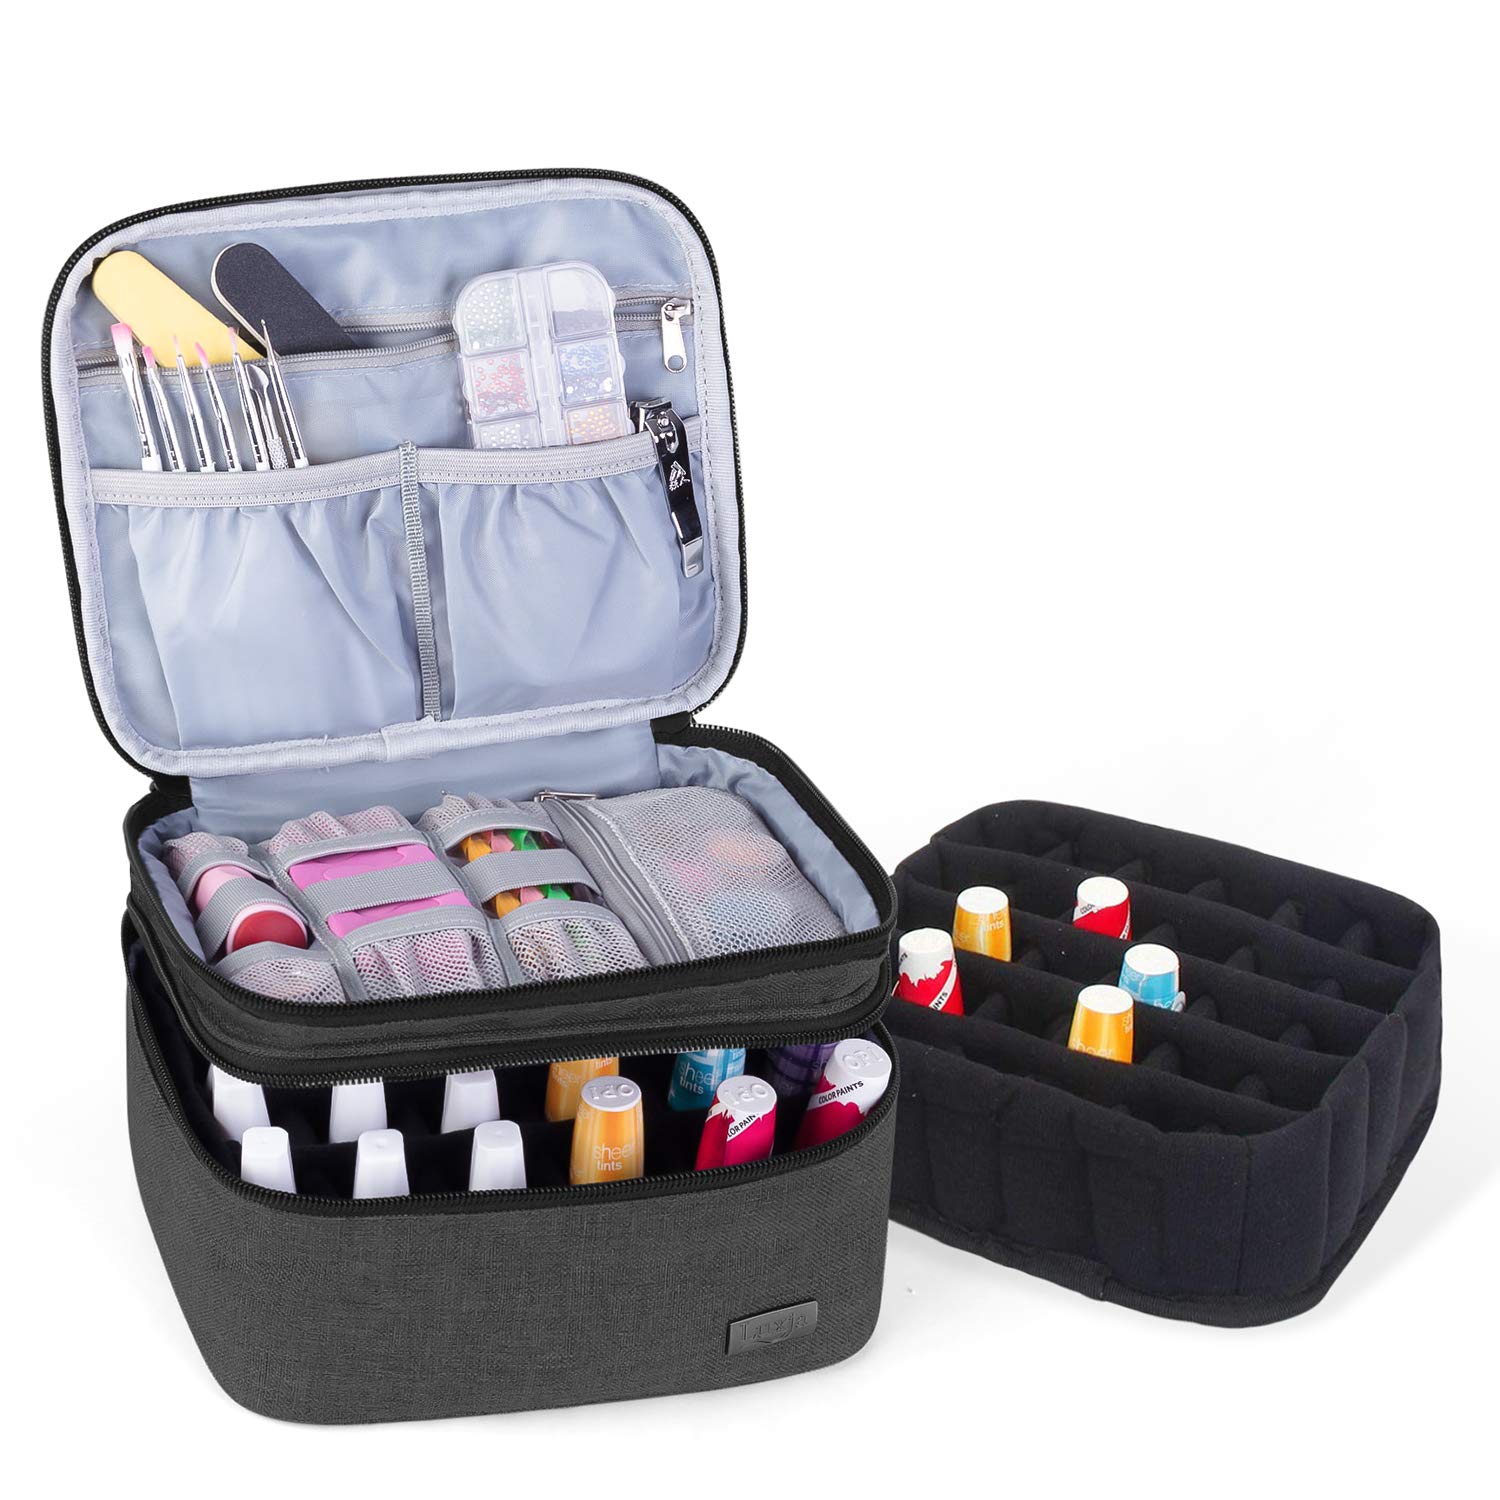 LUXJA Nail Polish Carrying Case - Holds 20 Bottles (15ml - 0.5 fl.oz), Portable Organizer Bag for Nail Polish and Manicure Set, Black